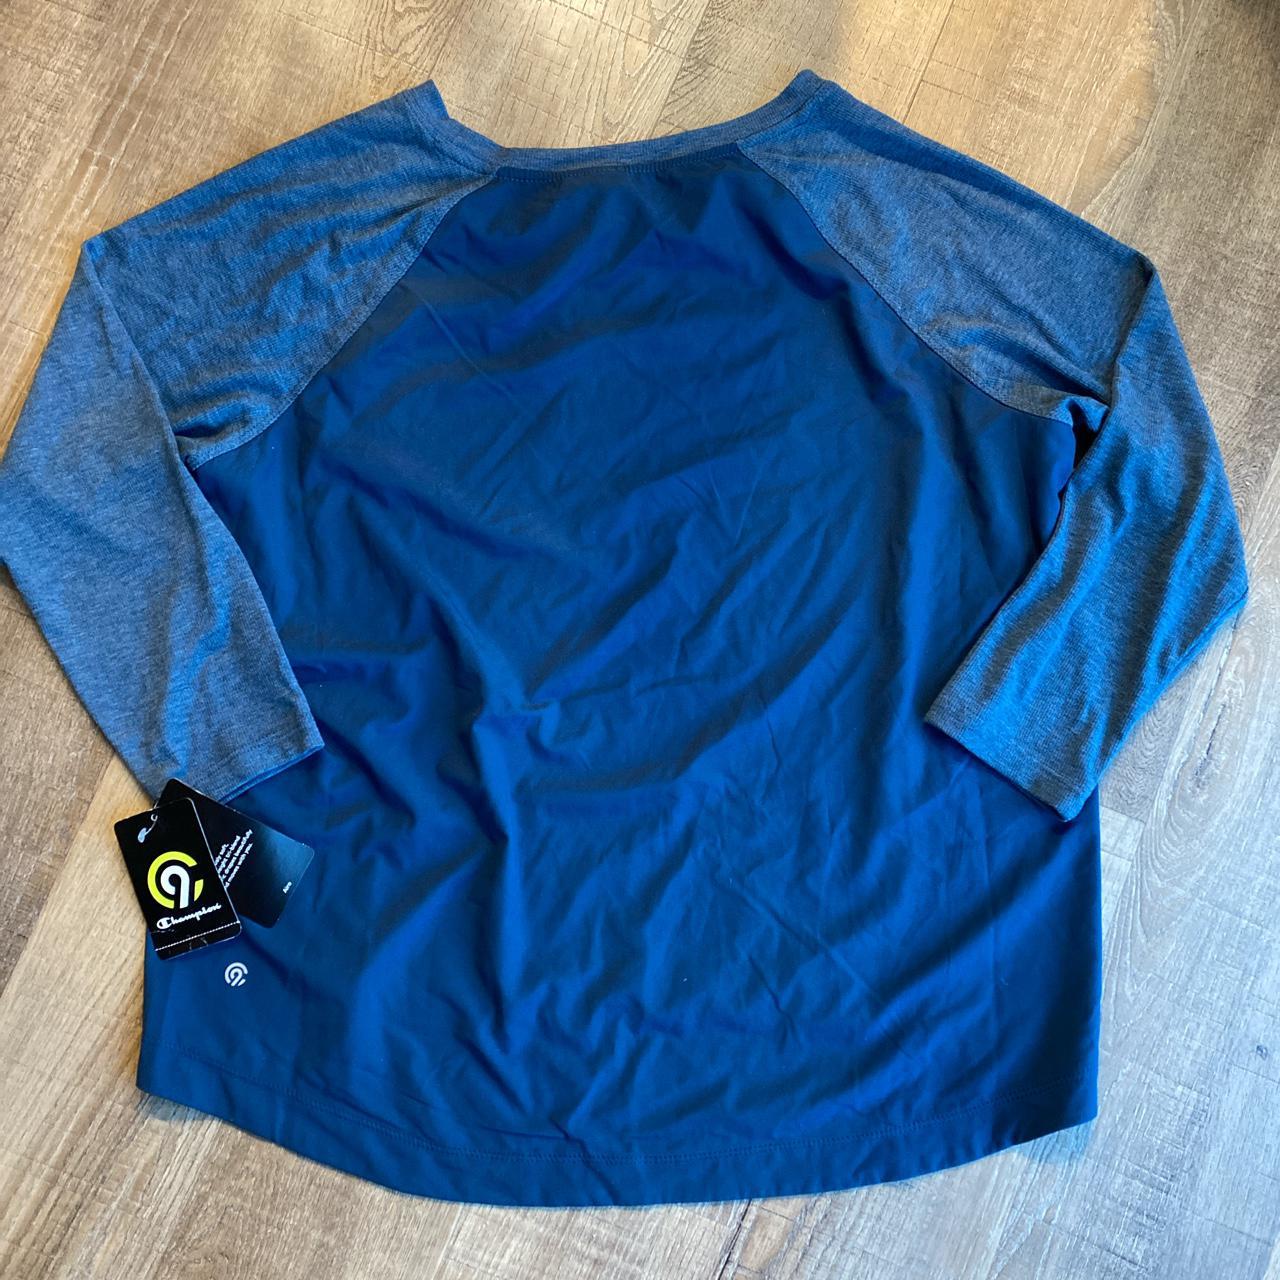 Product Image 4 - Champion. Shirt top jersey sweatshirt